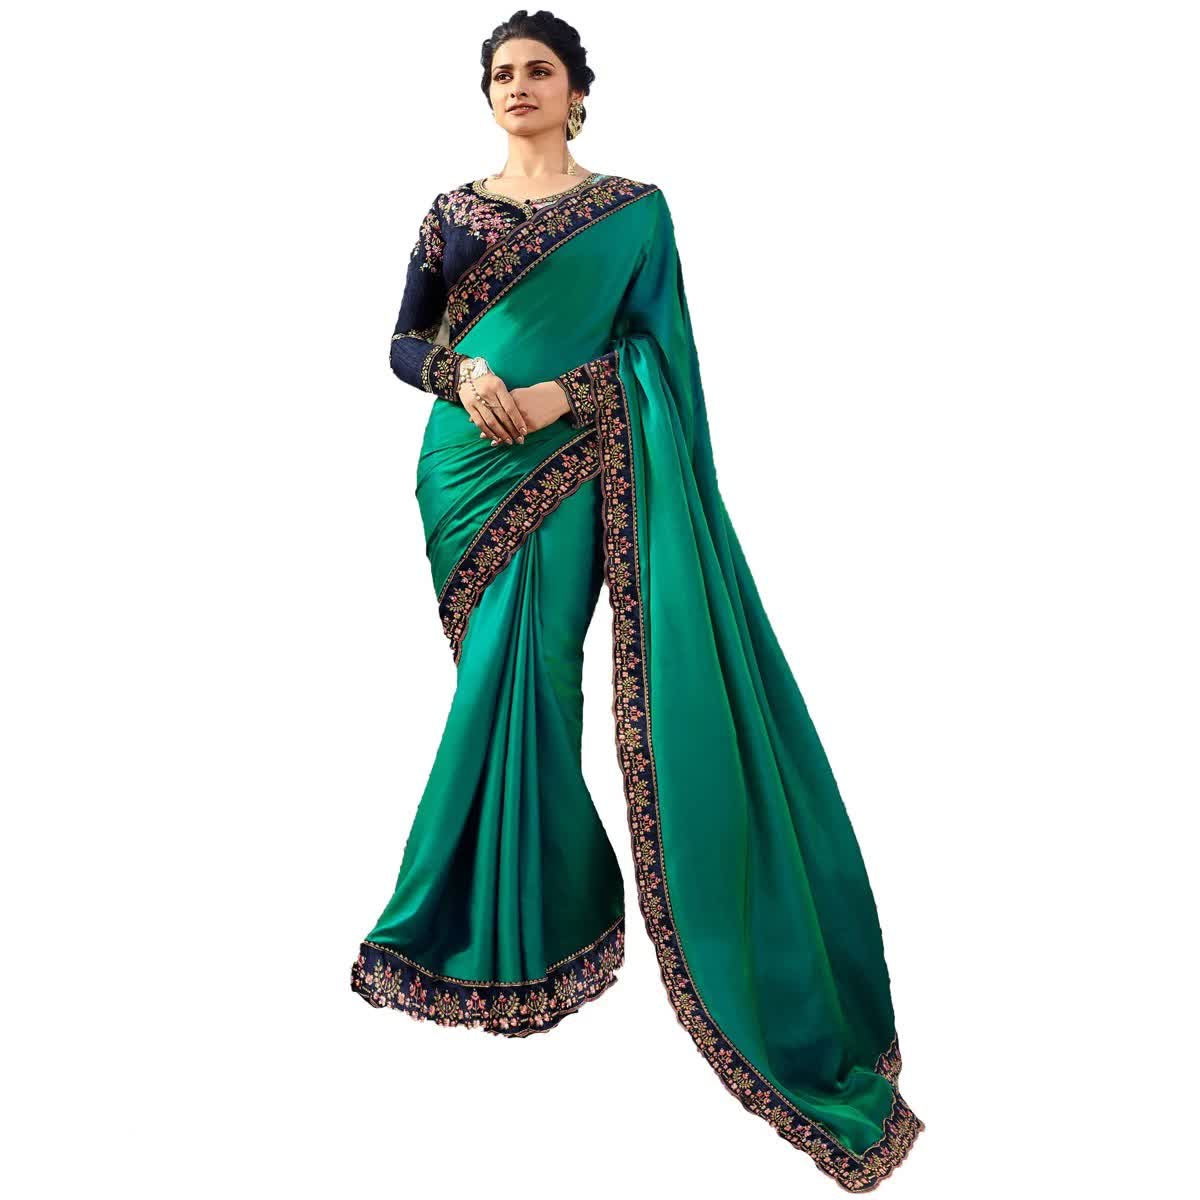 Одежда индии сари. Традиционная одежда Индии Сари. Национальный костюм Индии Сари. Одежда индийских женщин Сари. Сарри одежда в Индии.